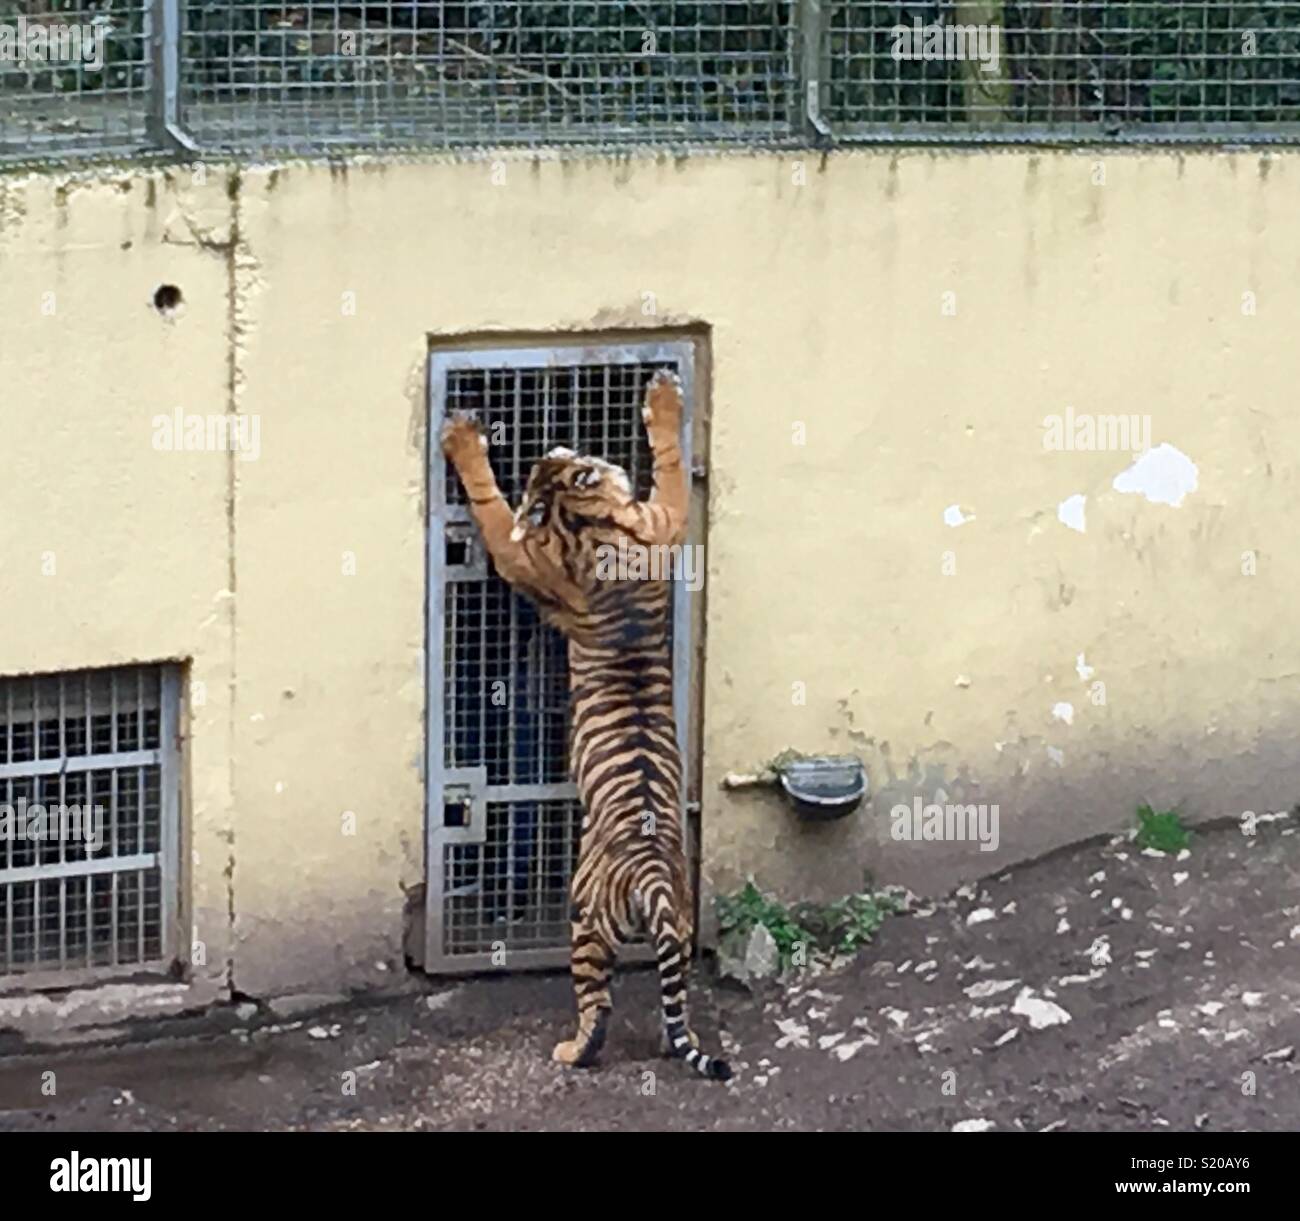 Sumatran tiger in an enclosure, clawing a cage door. Stock Photo